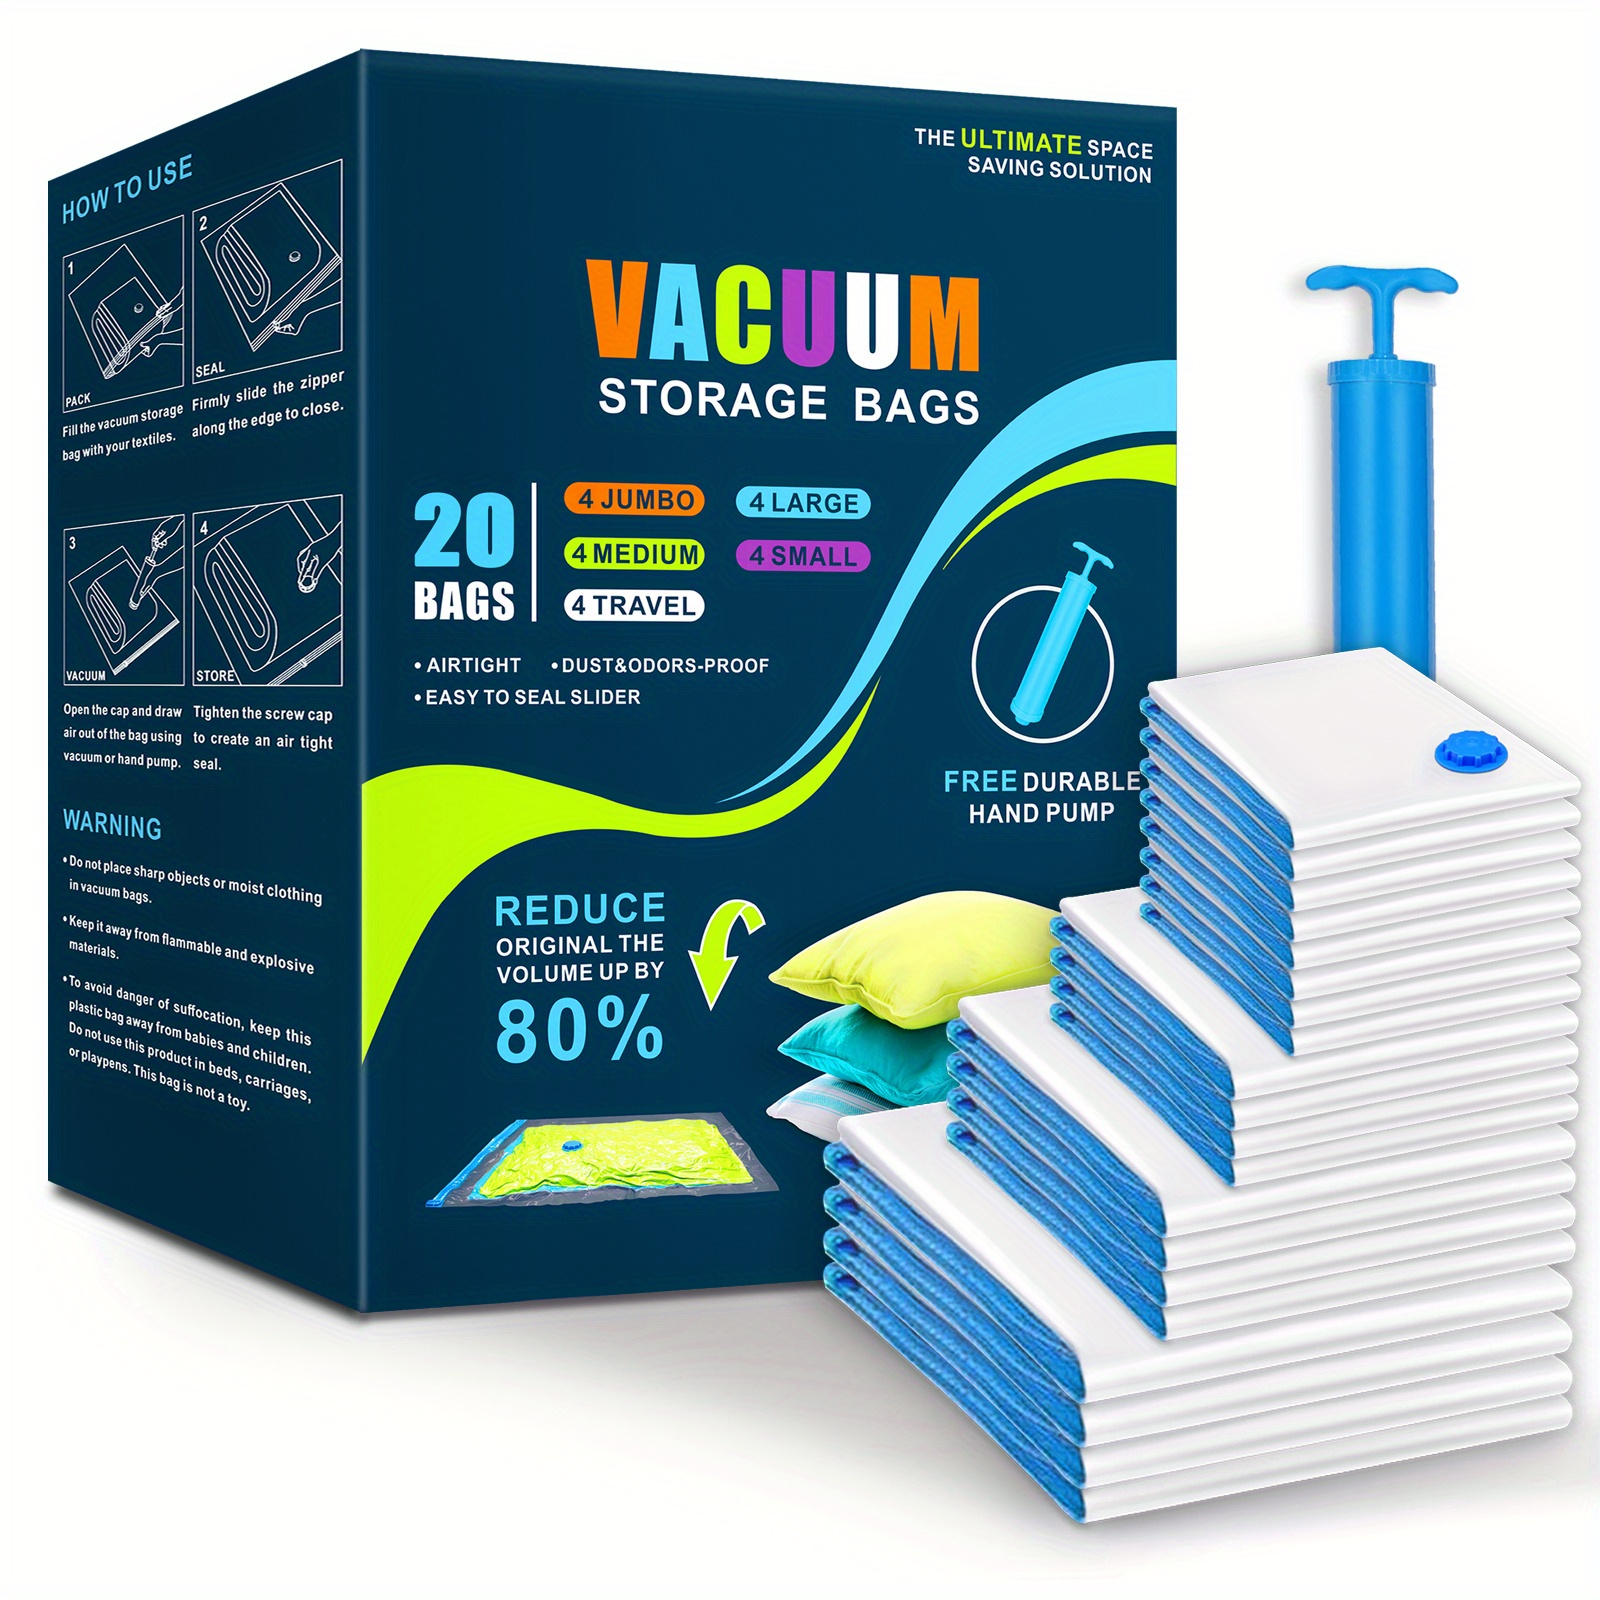 Vacuum Storage Bags With Free Hand Pump, Premium Space Saver